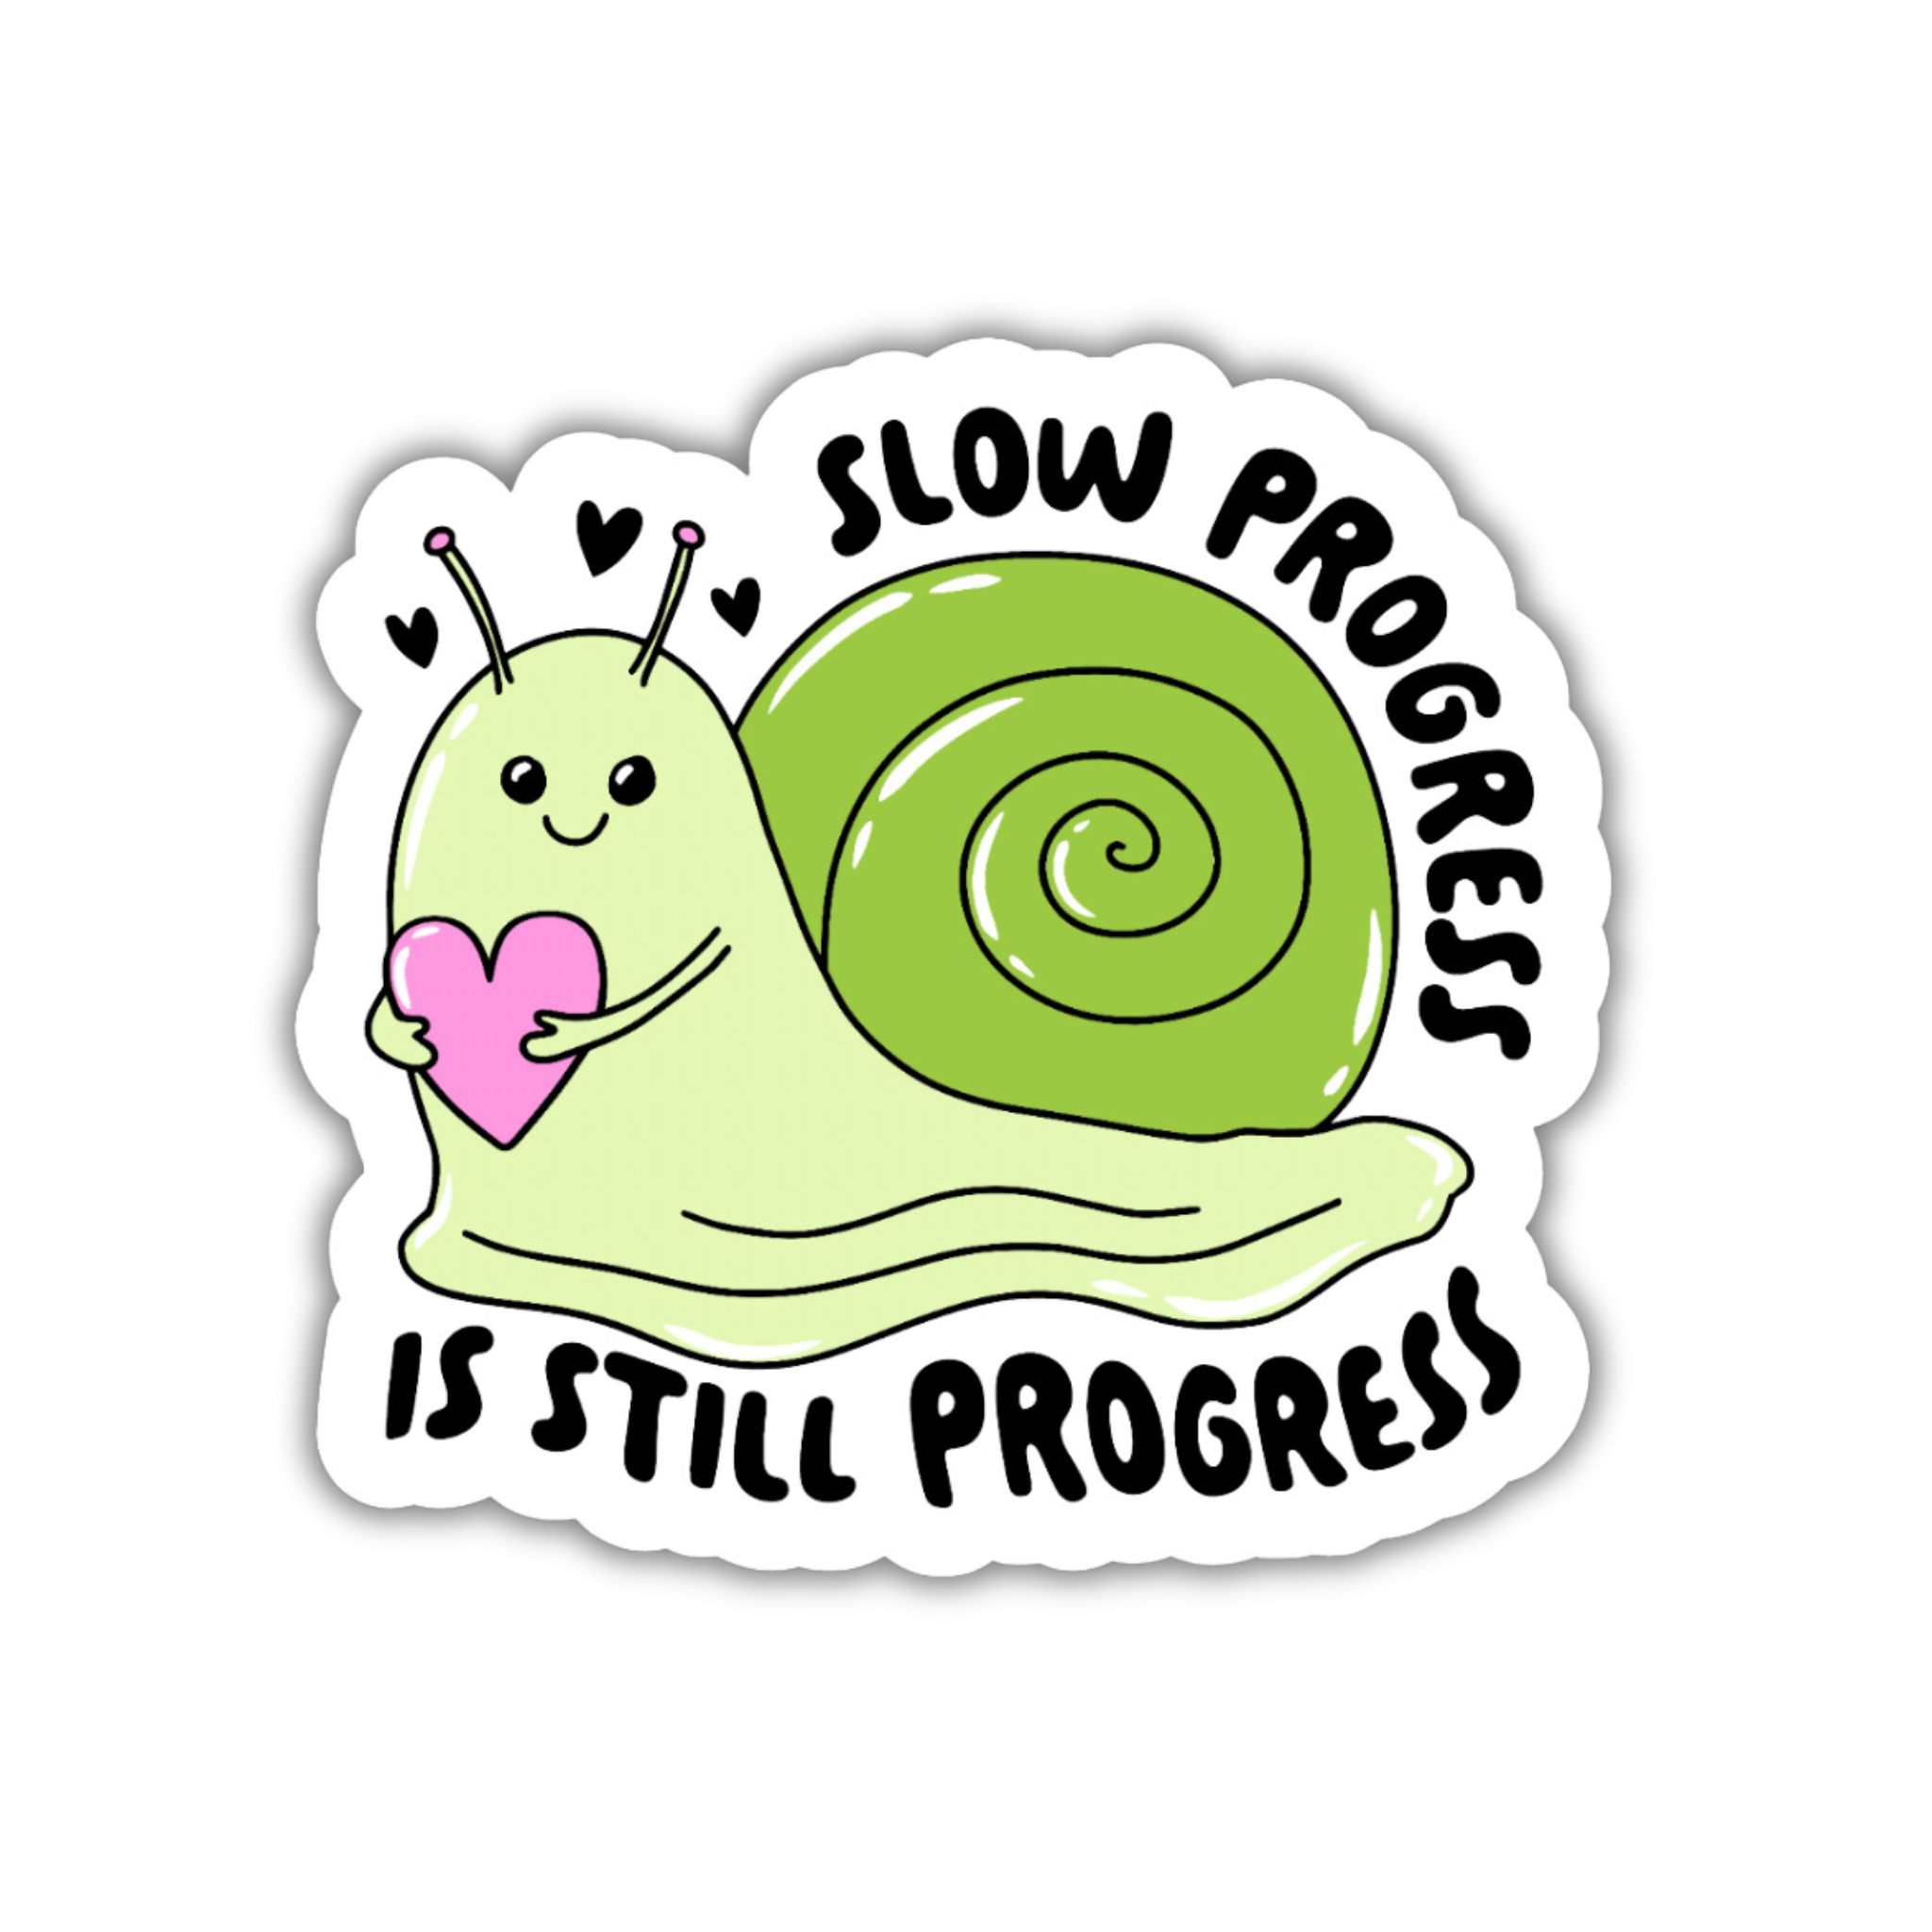 Slow Progress Is Still Progress Sticker